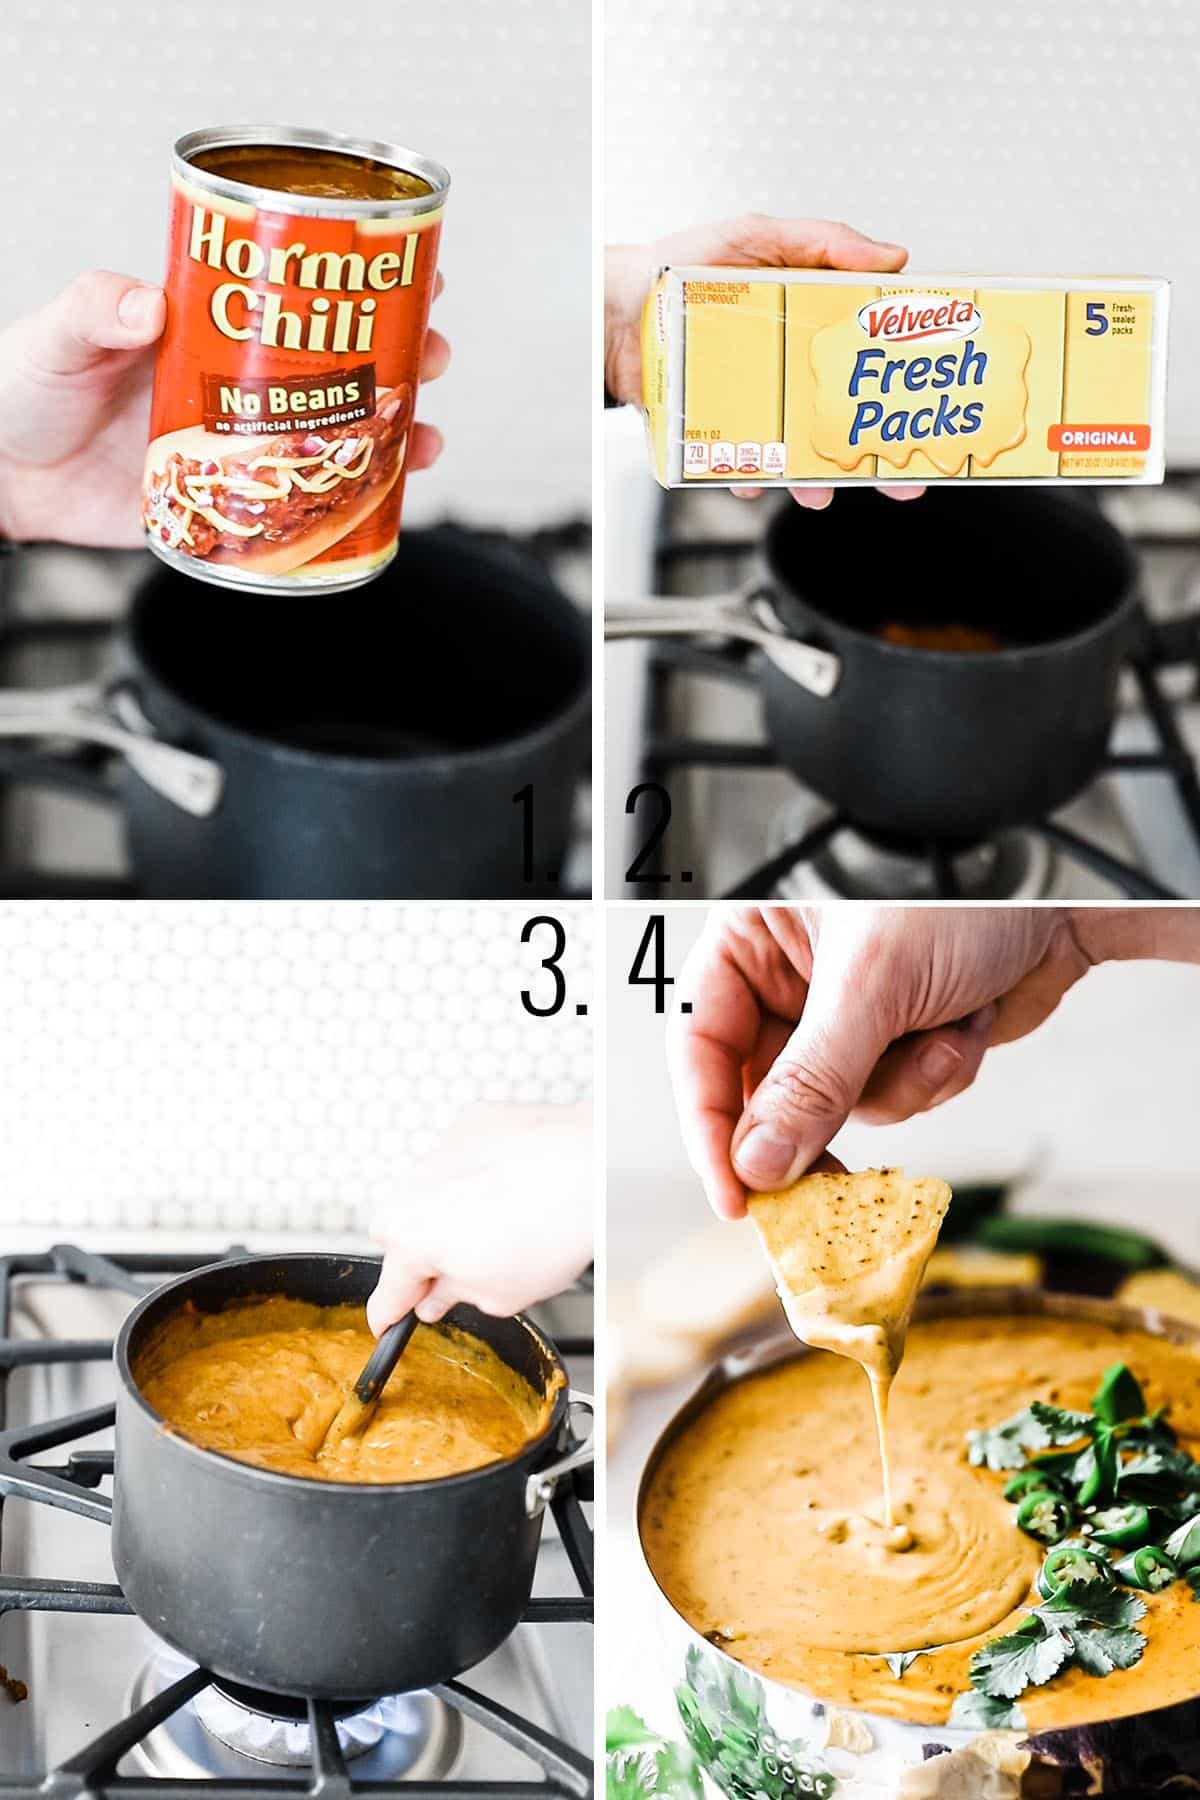 How to make chili cheese dip.